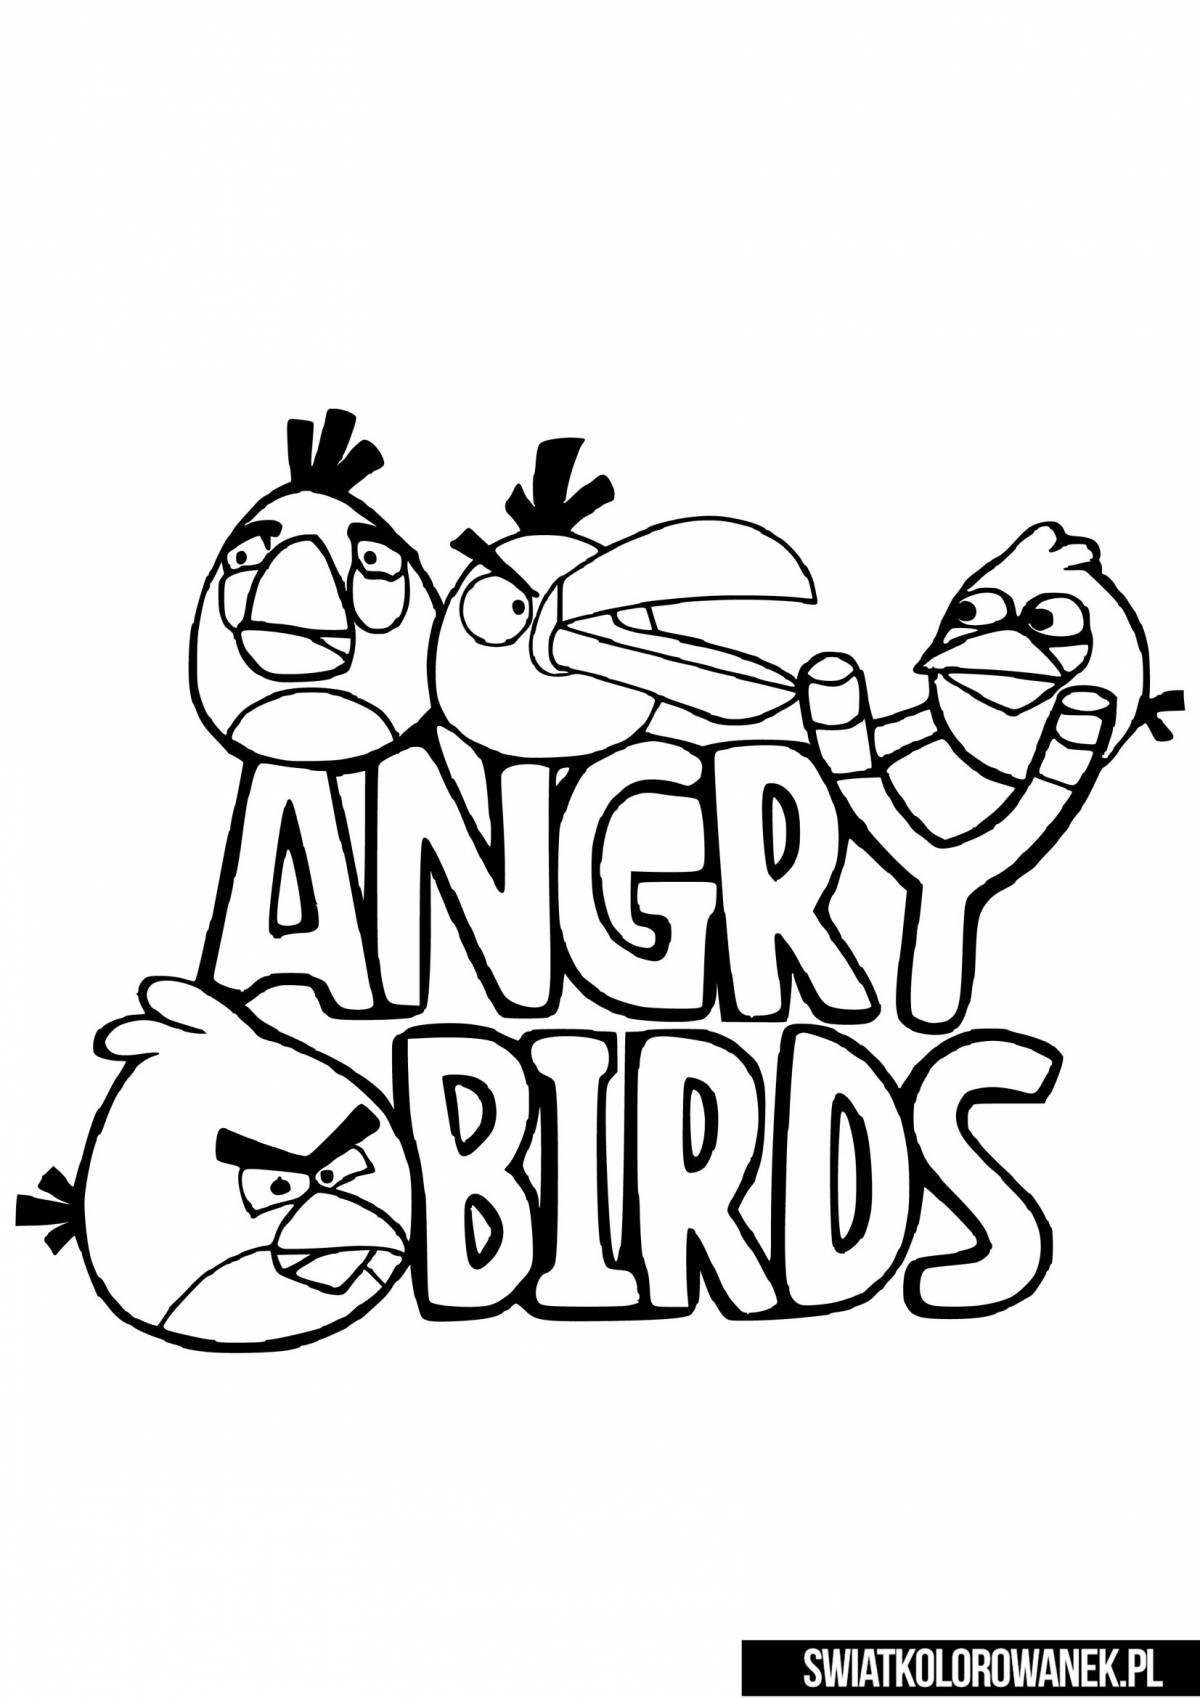 Angry birds seasons bold coloring